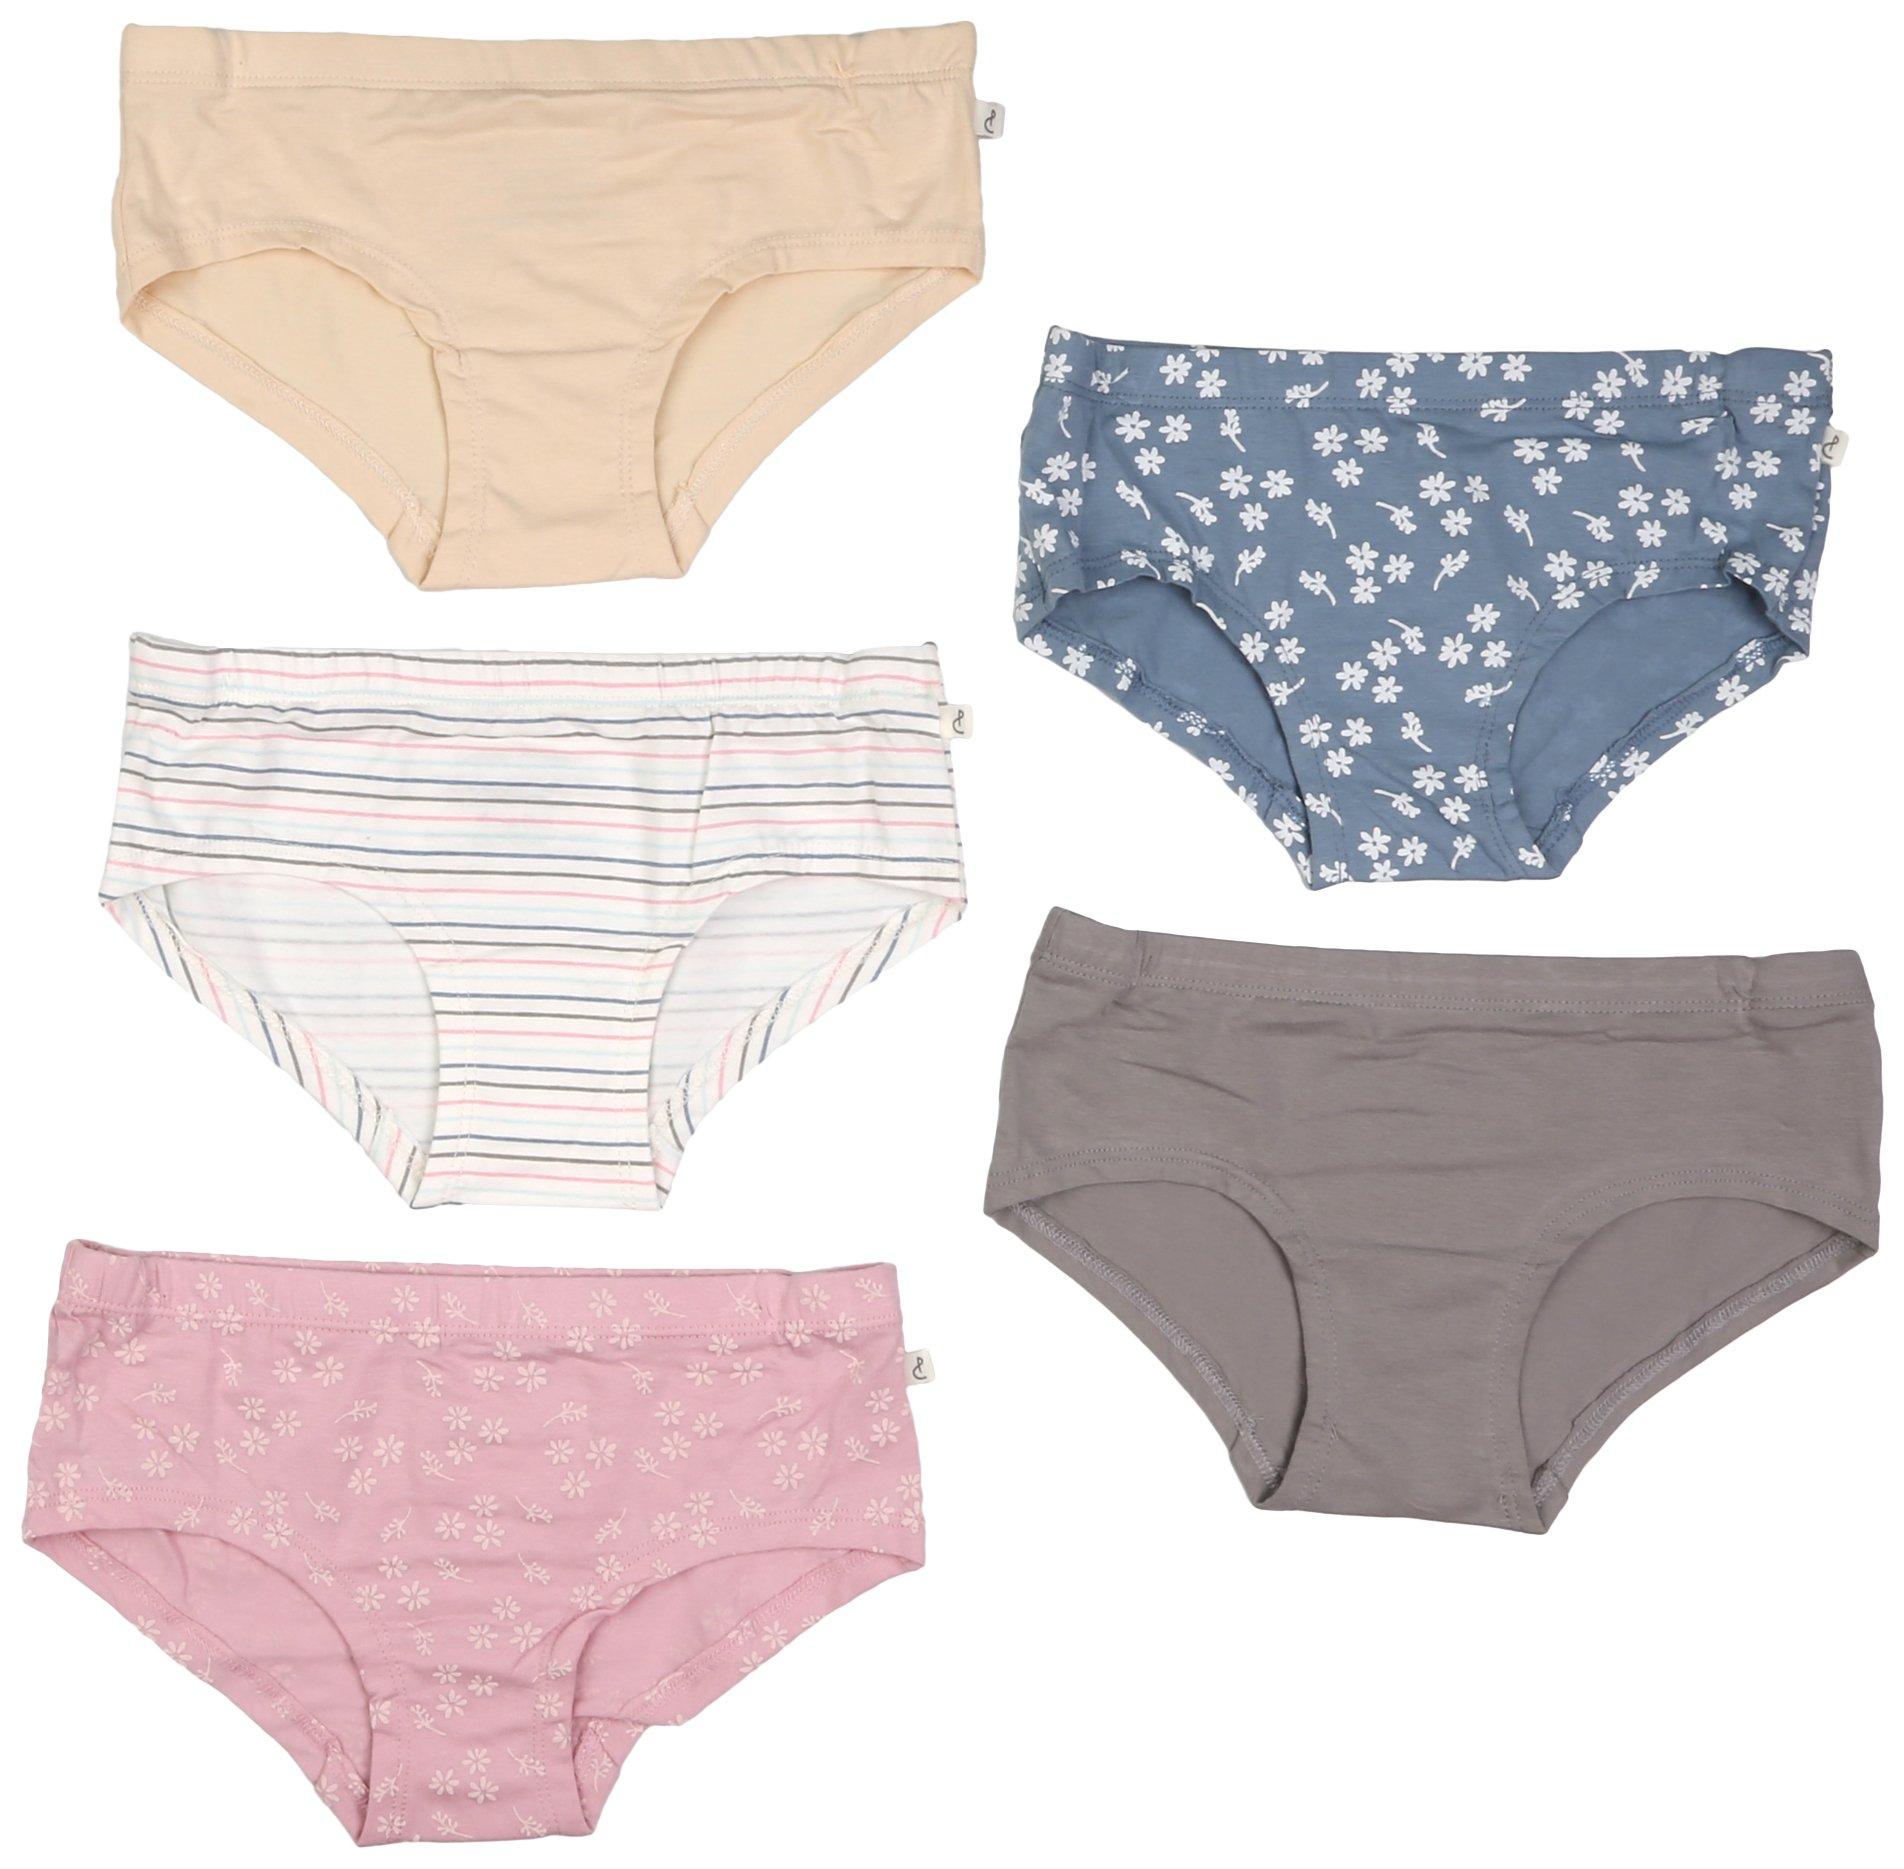  POPPY & CLAY Girls' Underwear Set - 2 Piece Organic Cotton Tag  Free Cami Tank Top Undershirt and Underwear Briefs (2T-12), Size 3T, Beige  Print: Clothing, Shoes & Jewelry